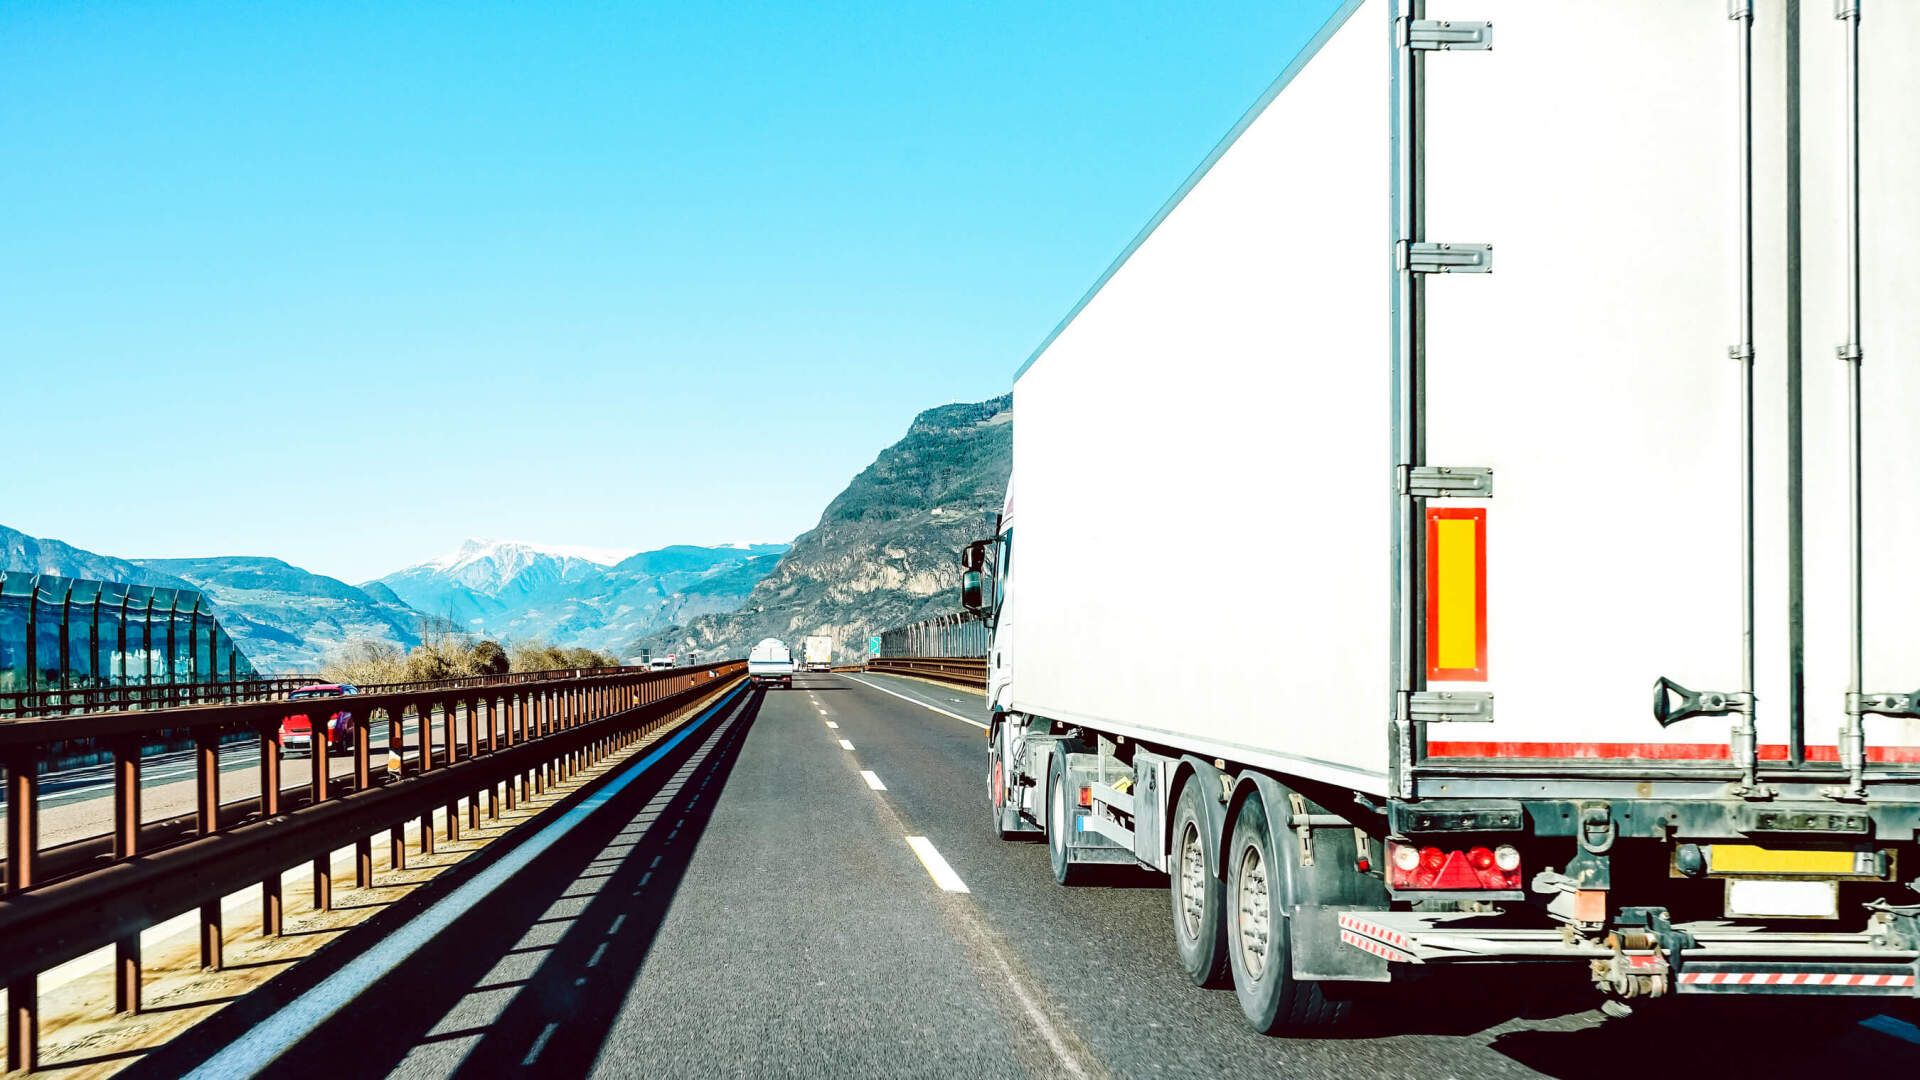 truck driving on the road needing liability insurance iowa